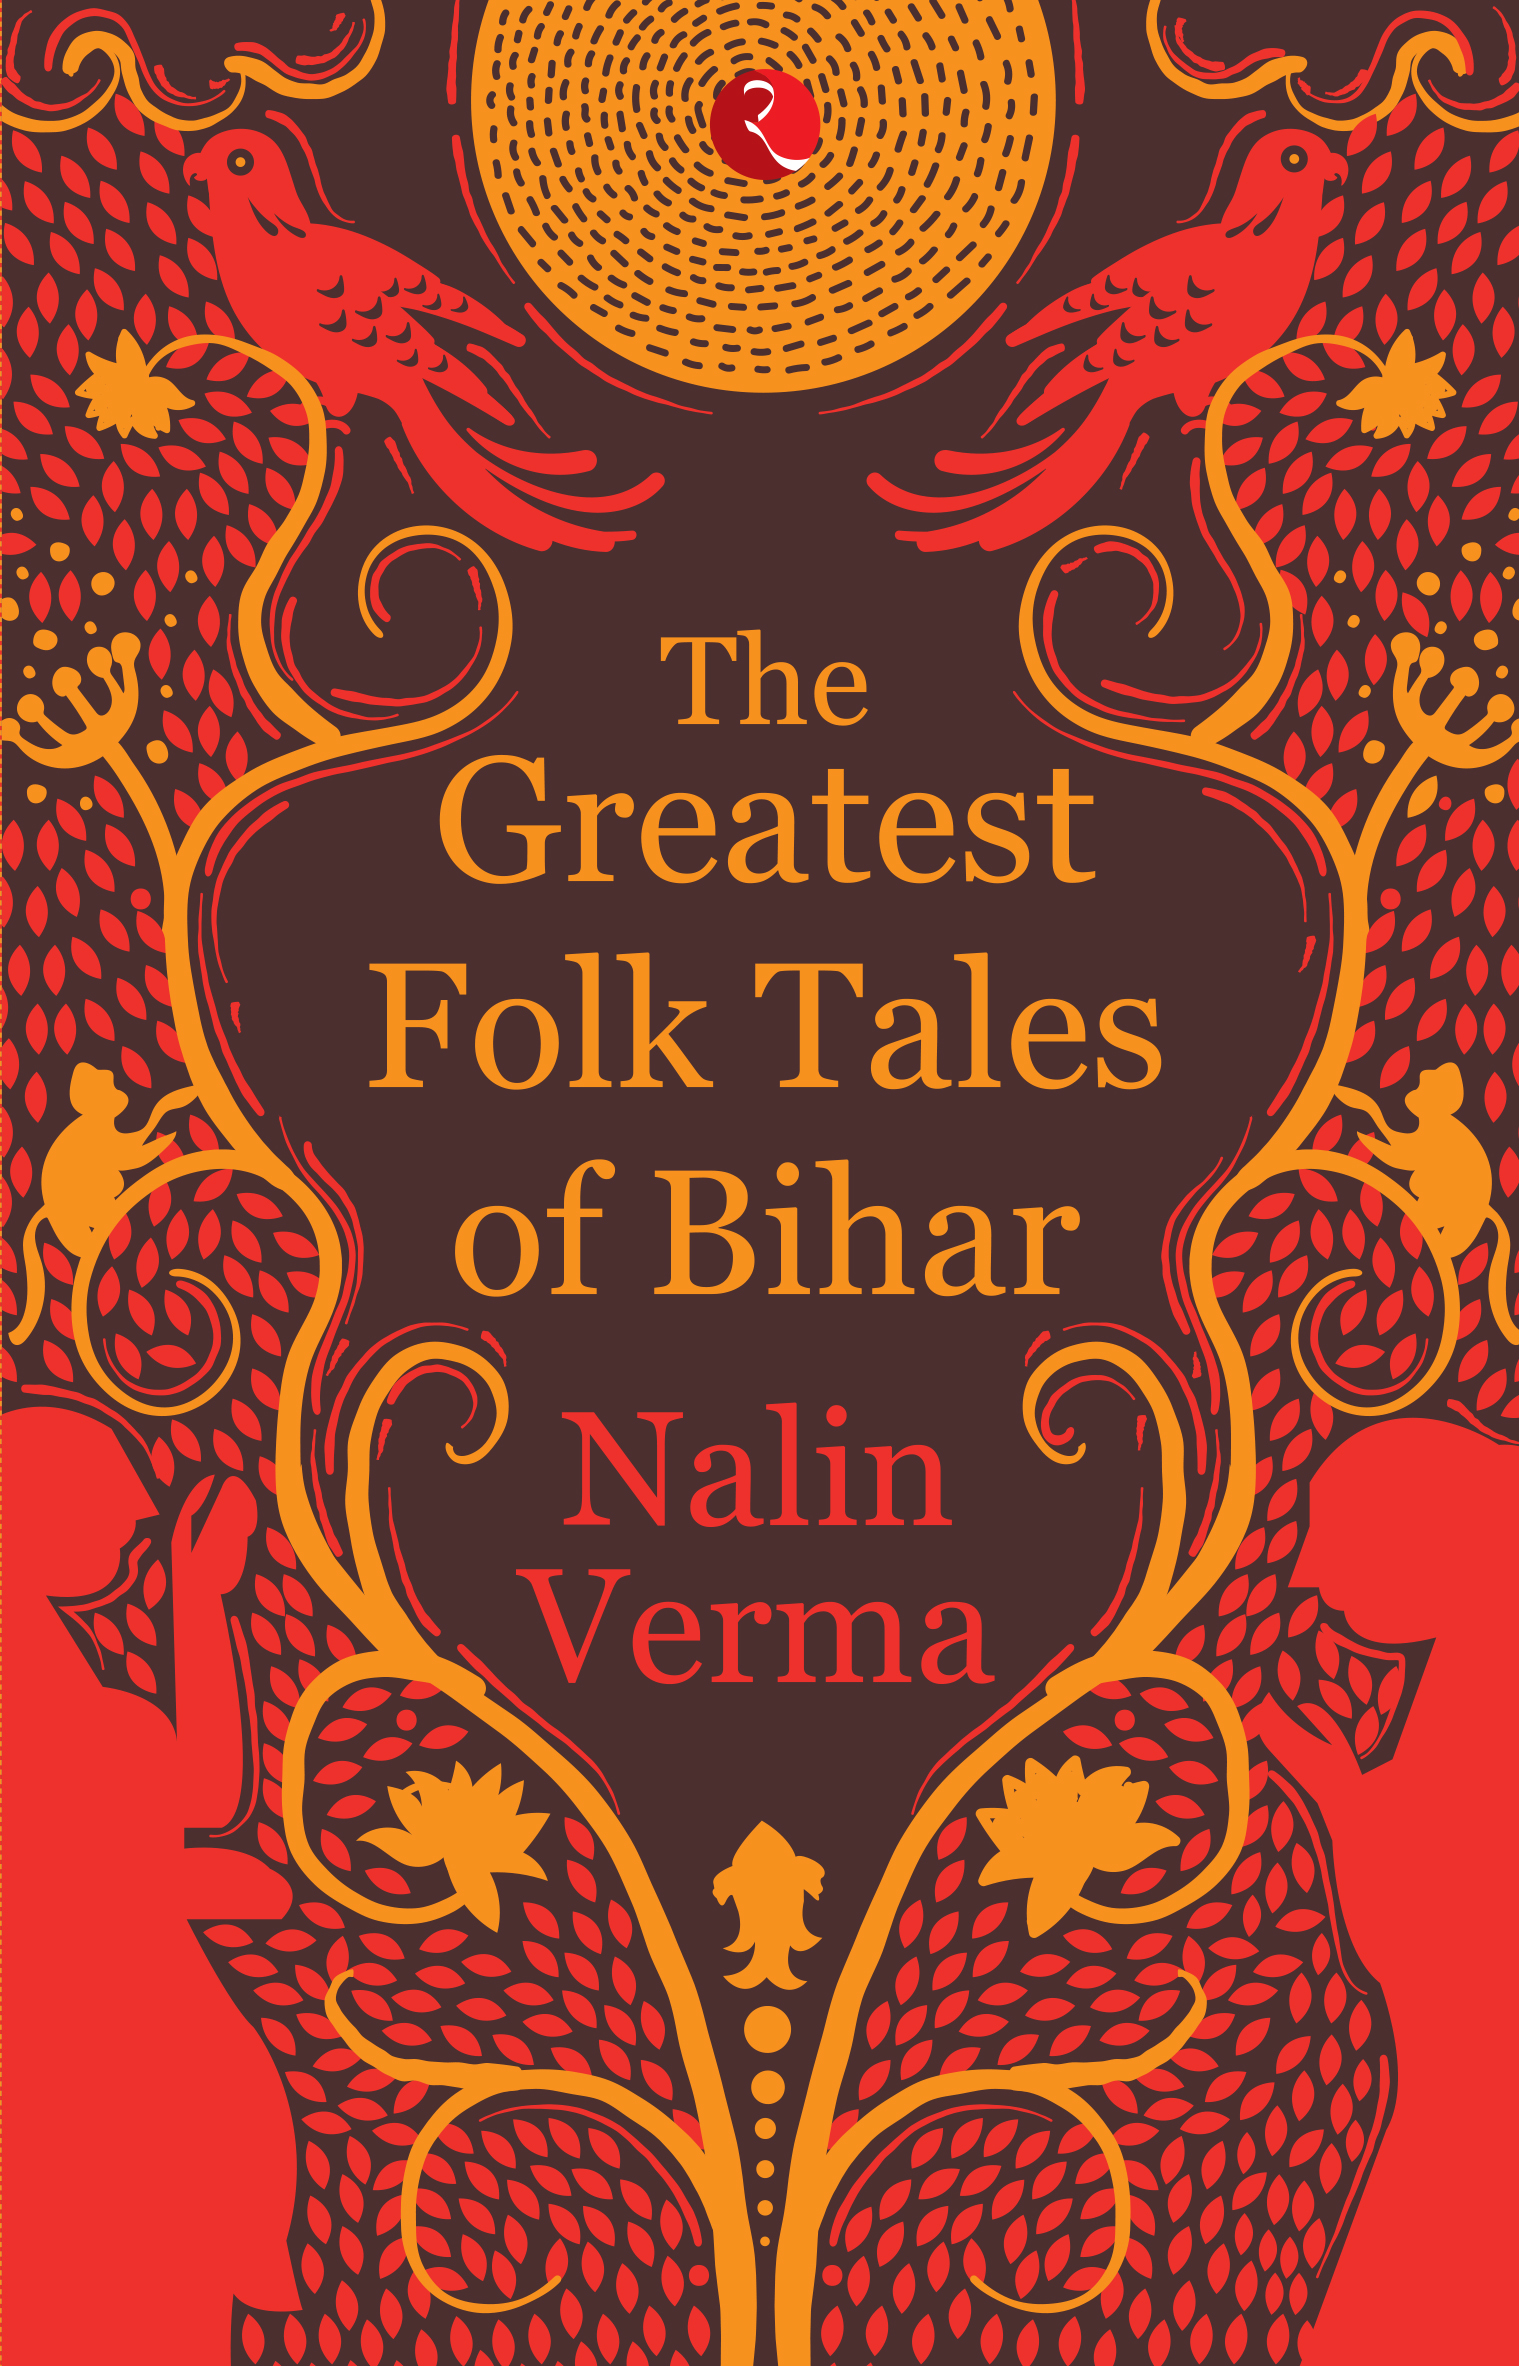 The greatest folktales of Bihar_Cover Spread